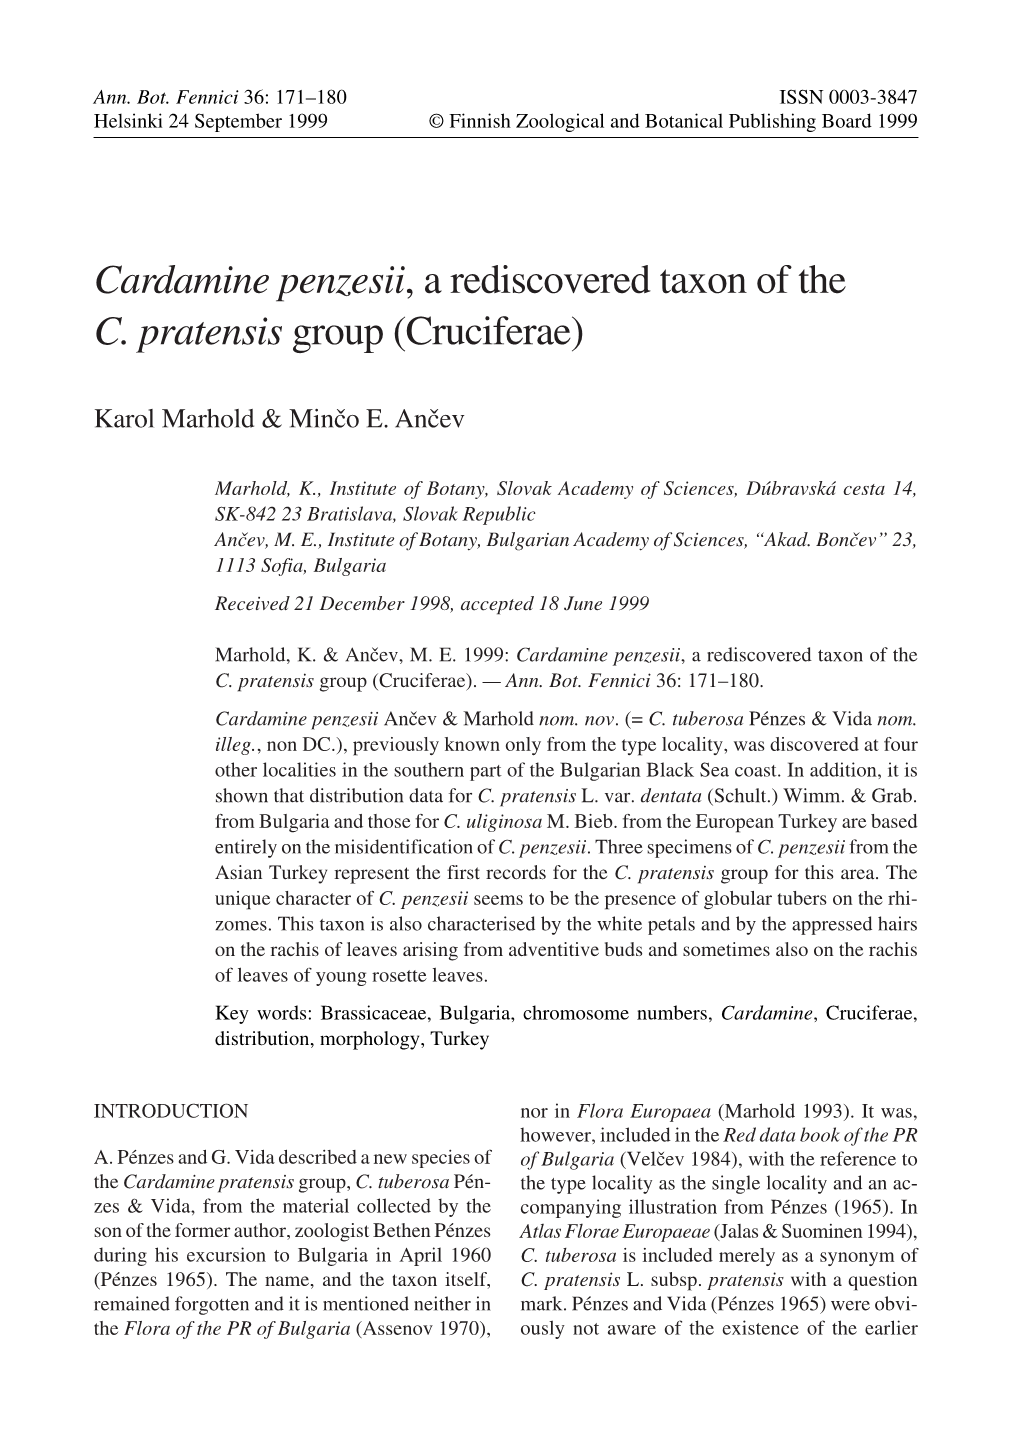 Cardamine Penzesii, a Rediscovered Taxon of the C. Pratensis Group (Cruciferae)